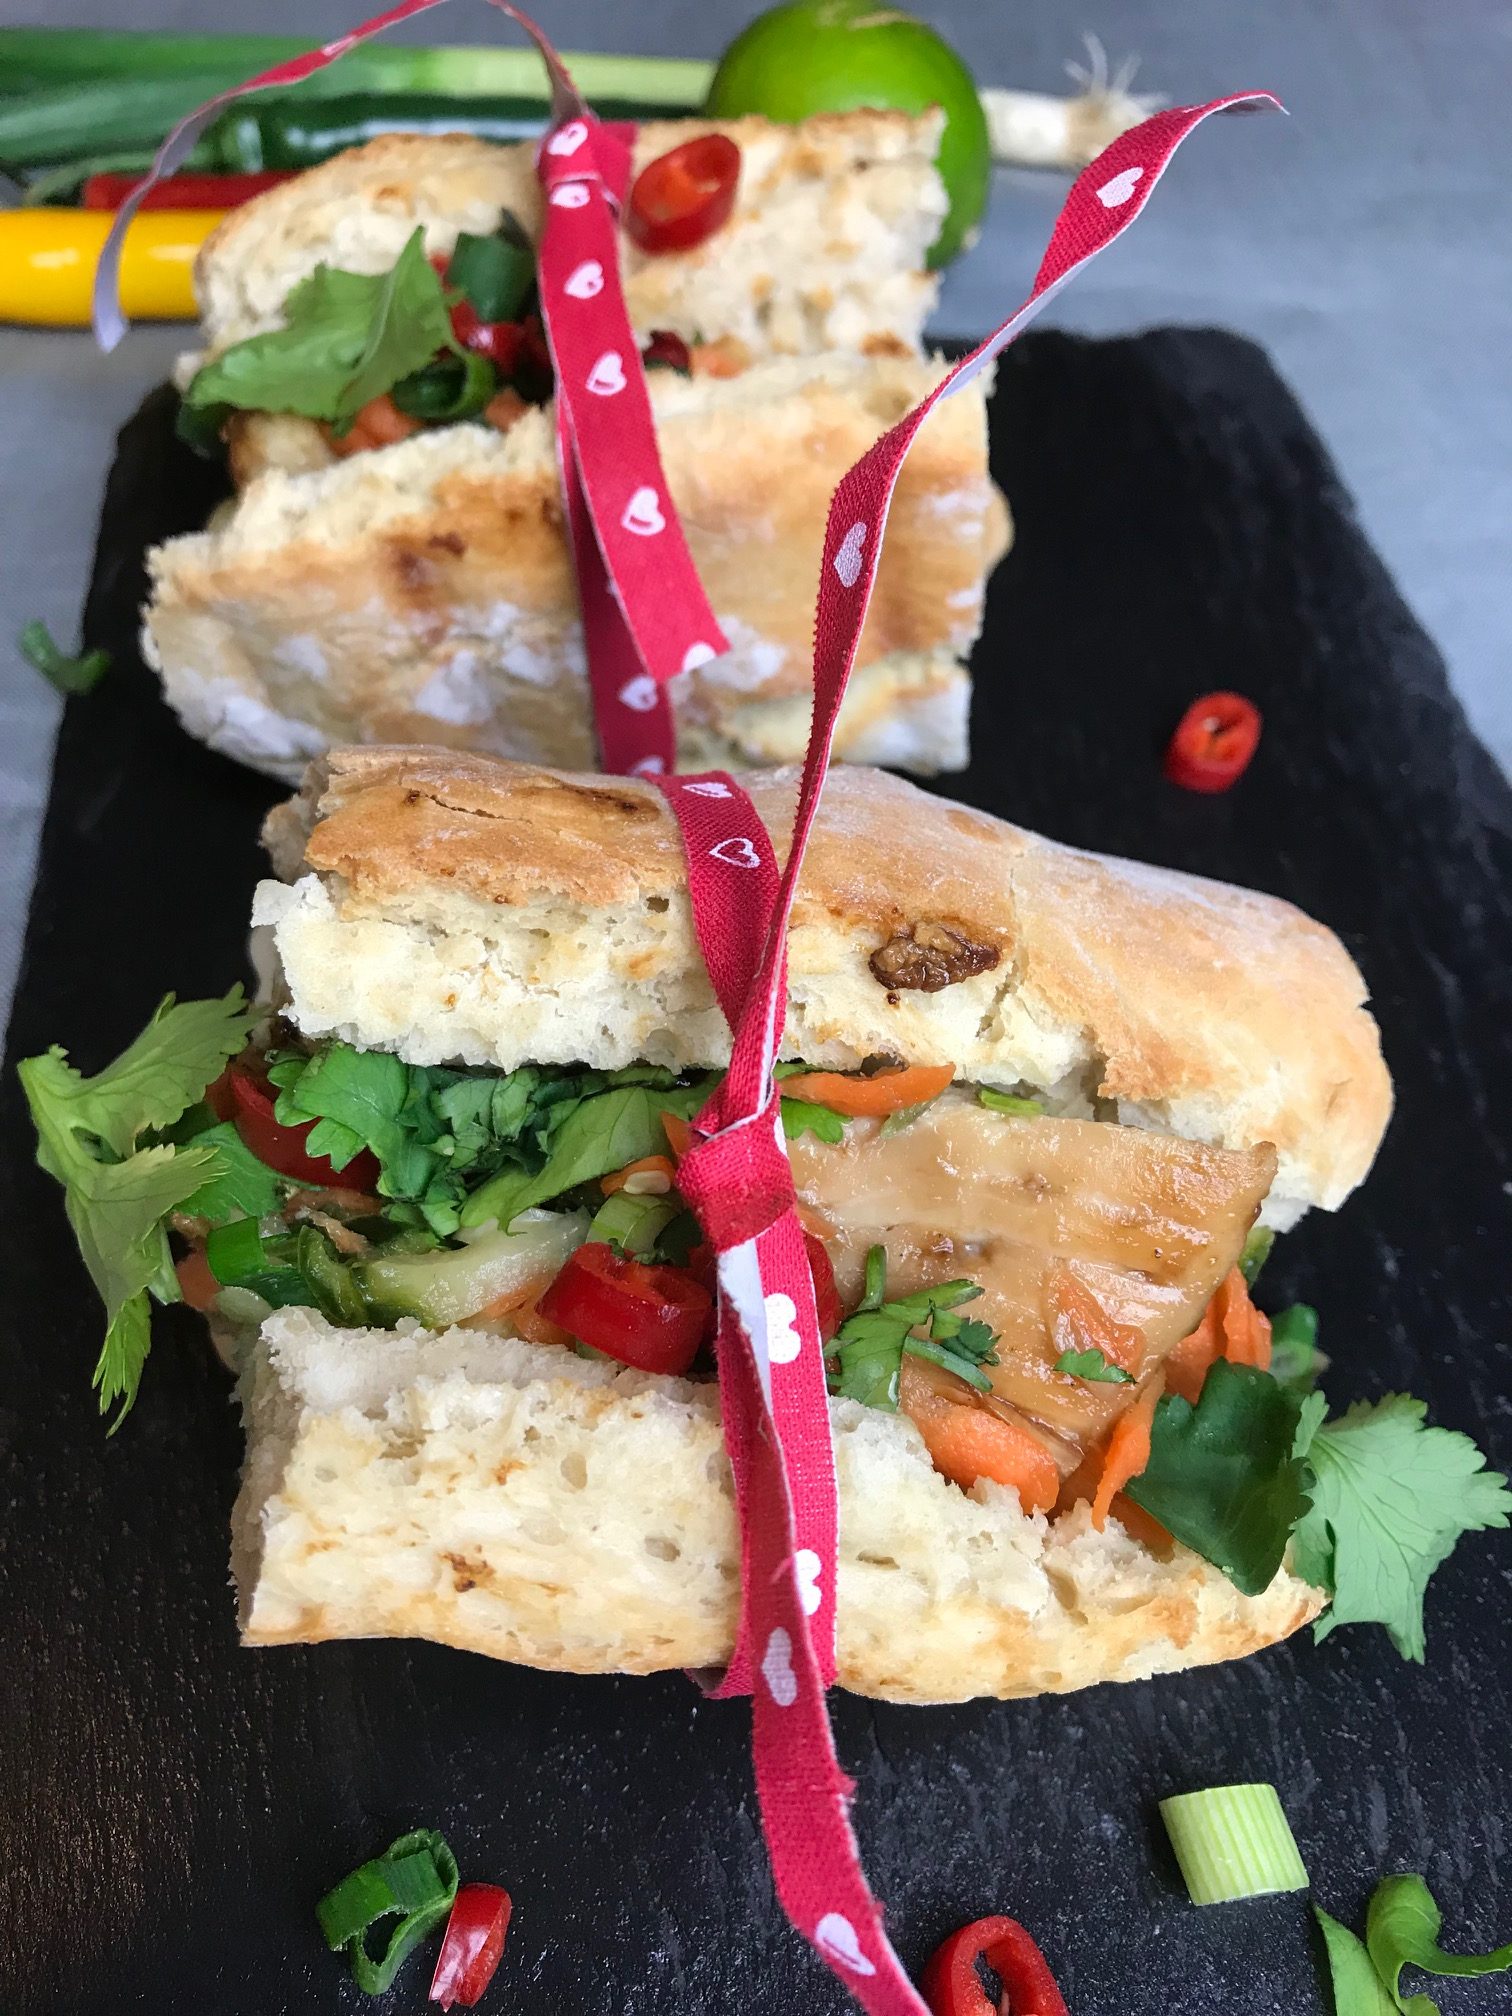 Bánh-brechend lecker: das vietnamesische Sandwich Bánh mì